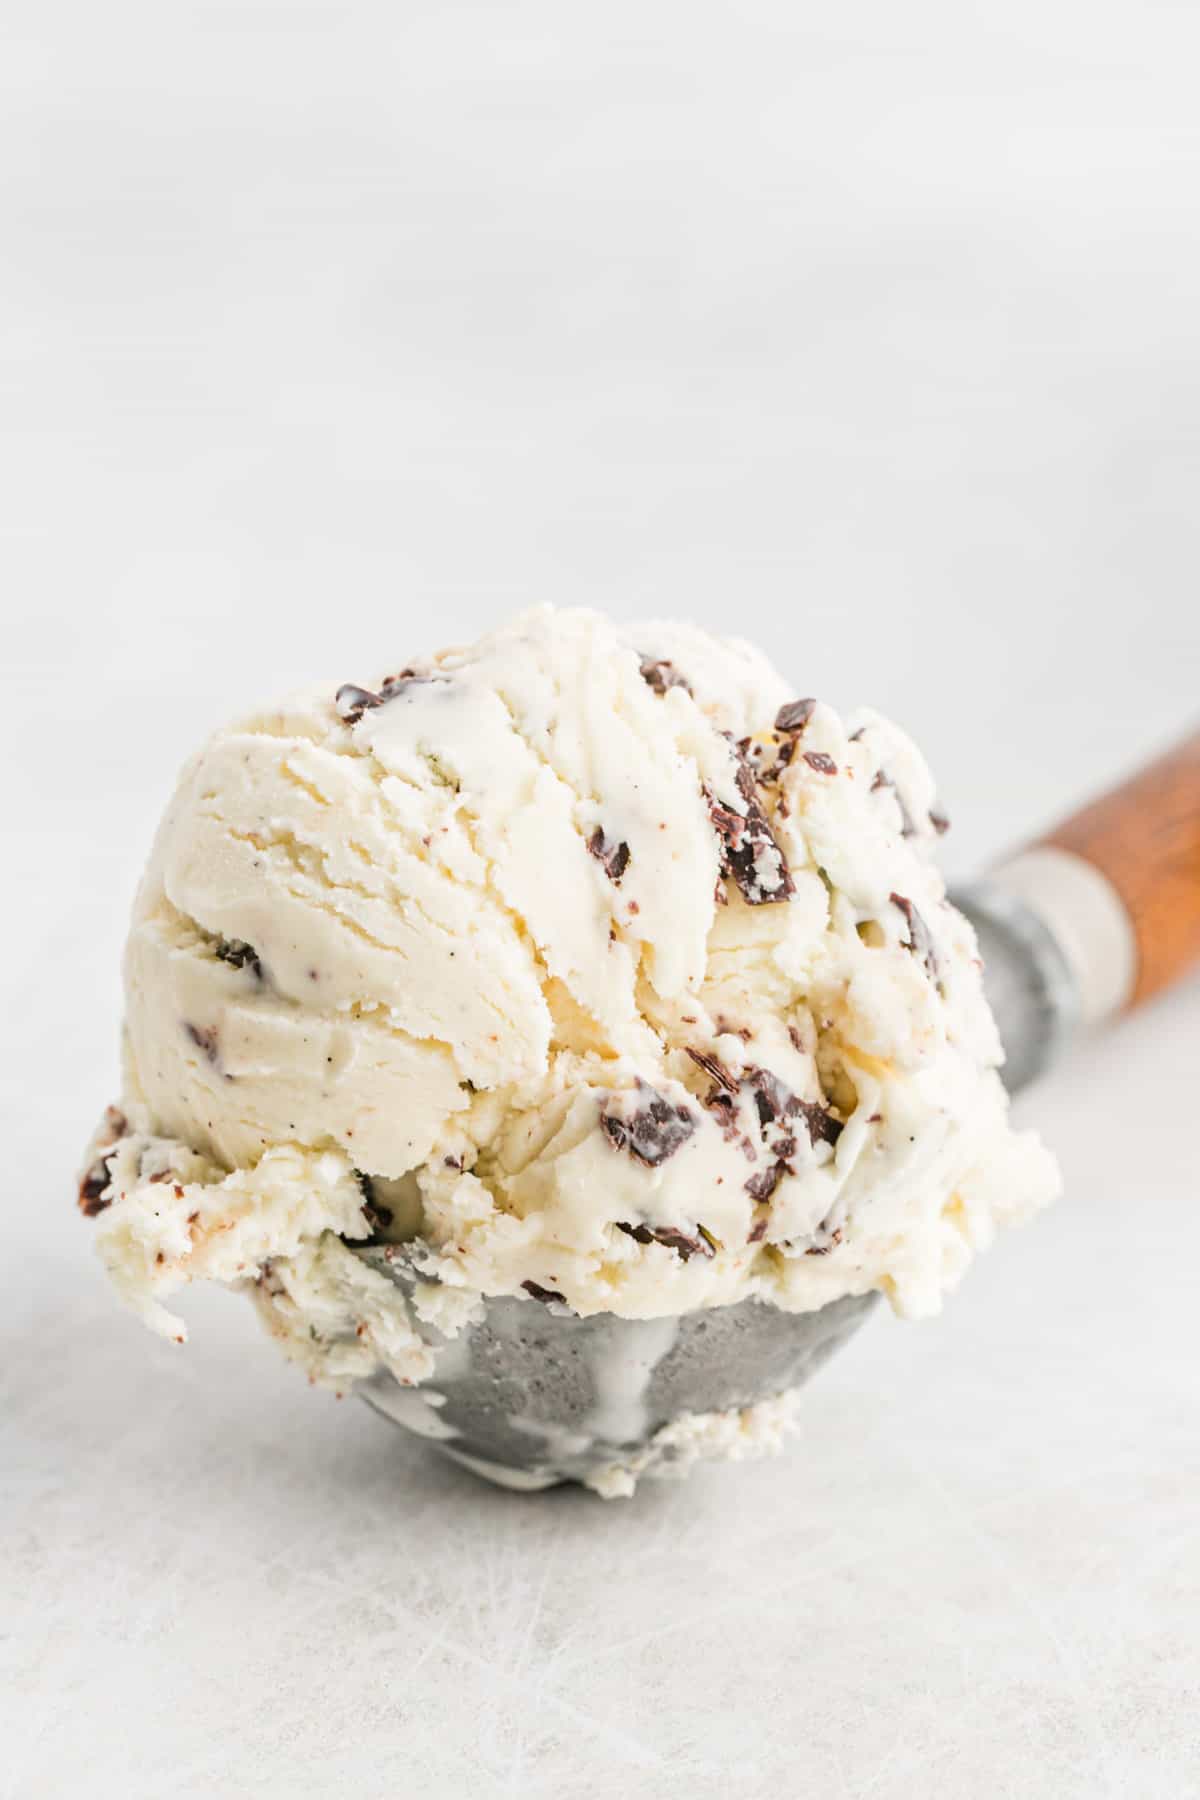 chocolate chip ice cream in a metal ice cream scoop